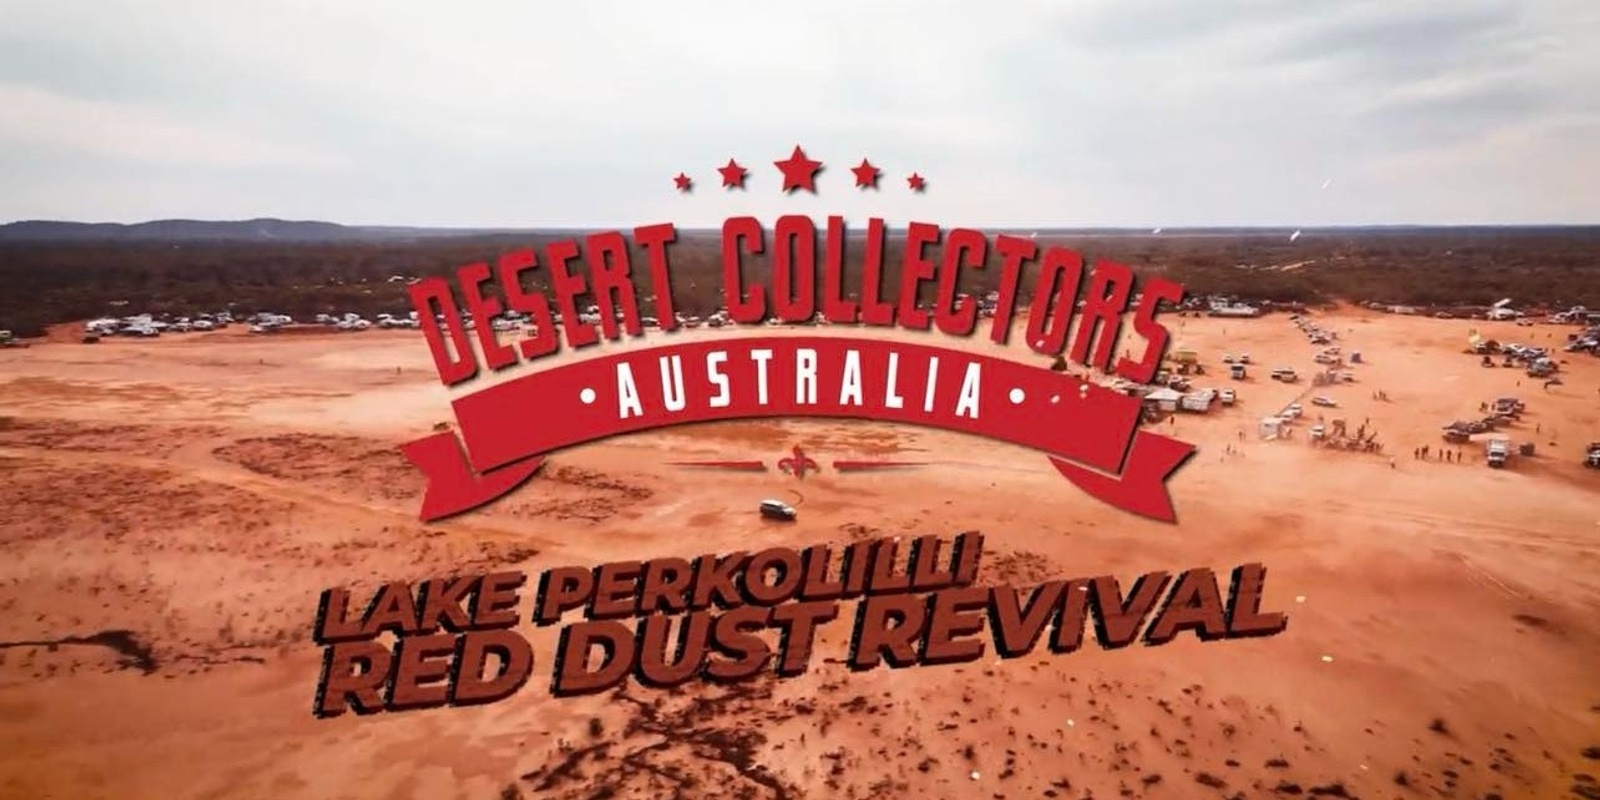 Banner image for Desert Collectors Red Dust Revival 2022